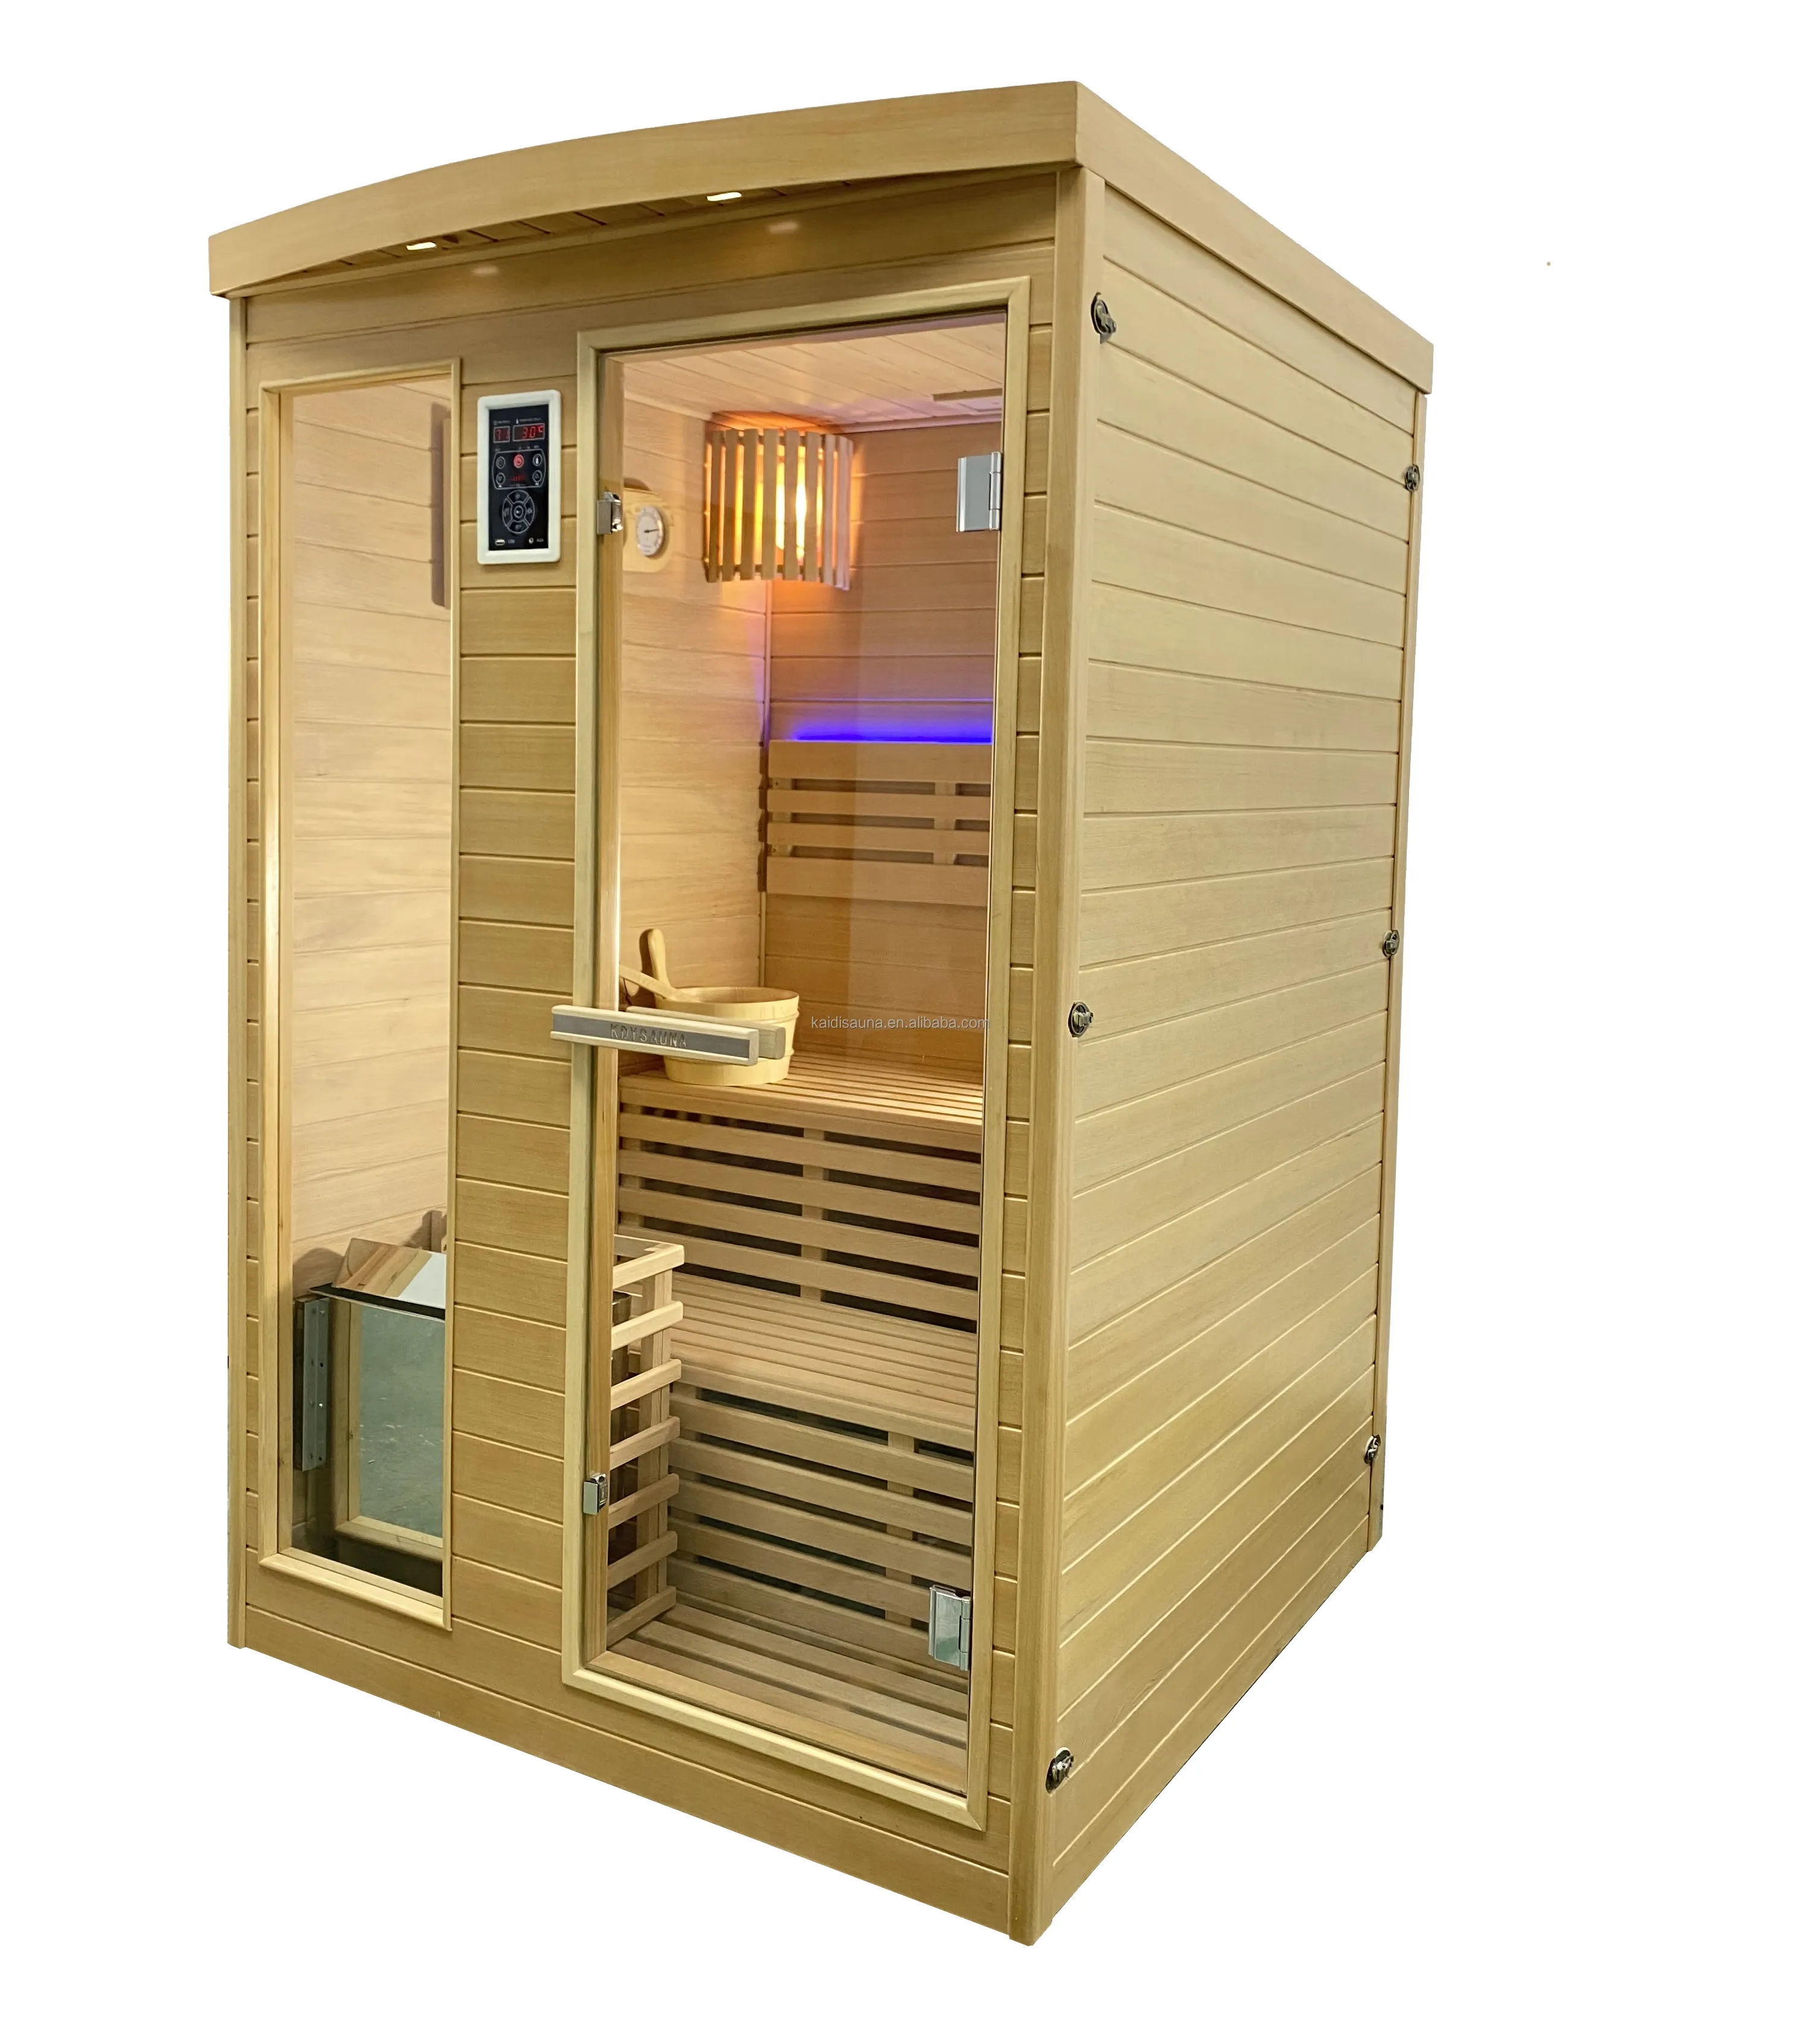 Cabine de sauna Finlande Salle de sauna sec pour 2 personnes